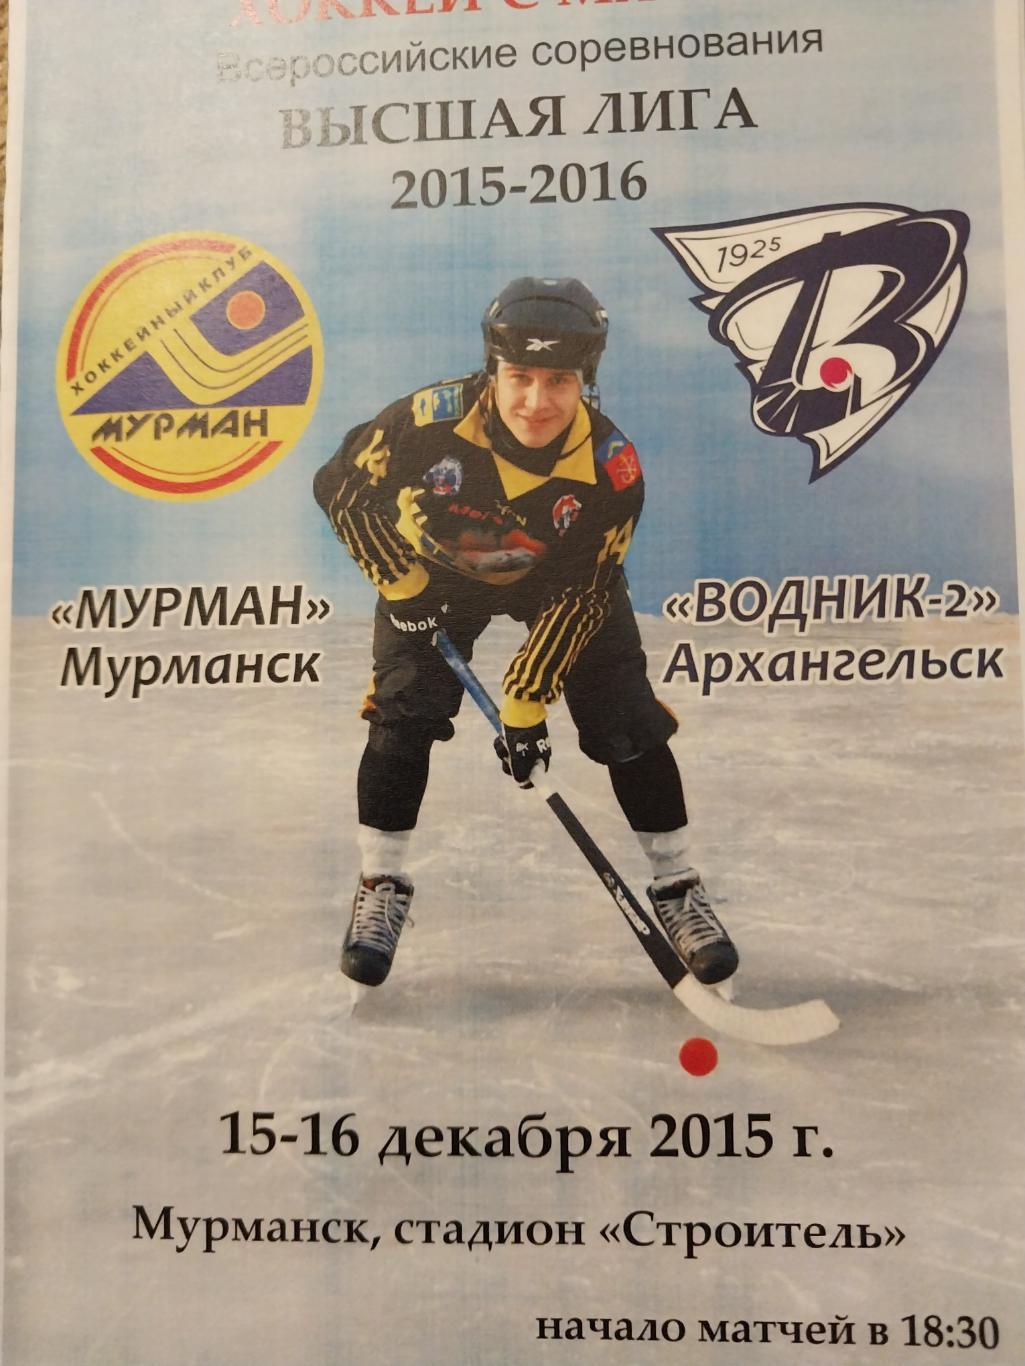 Мурман (Мурманск) - Водник-2 (Архангельск) 15-16.12.2015